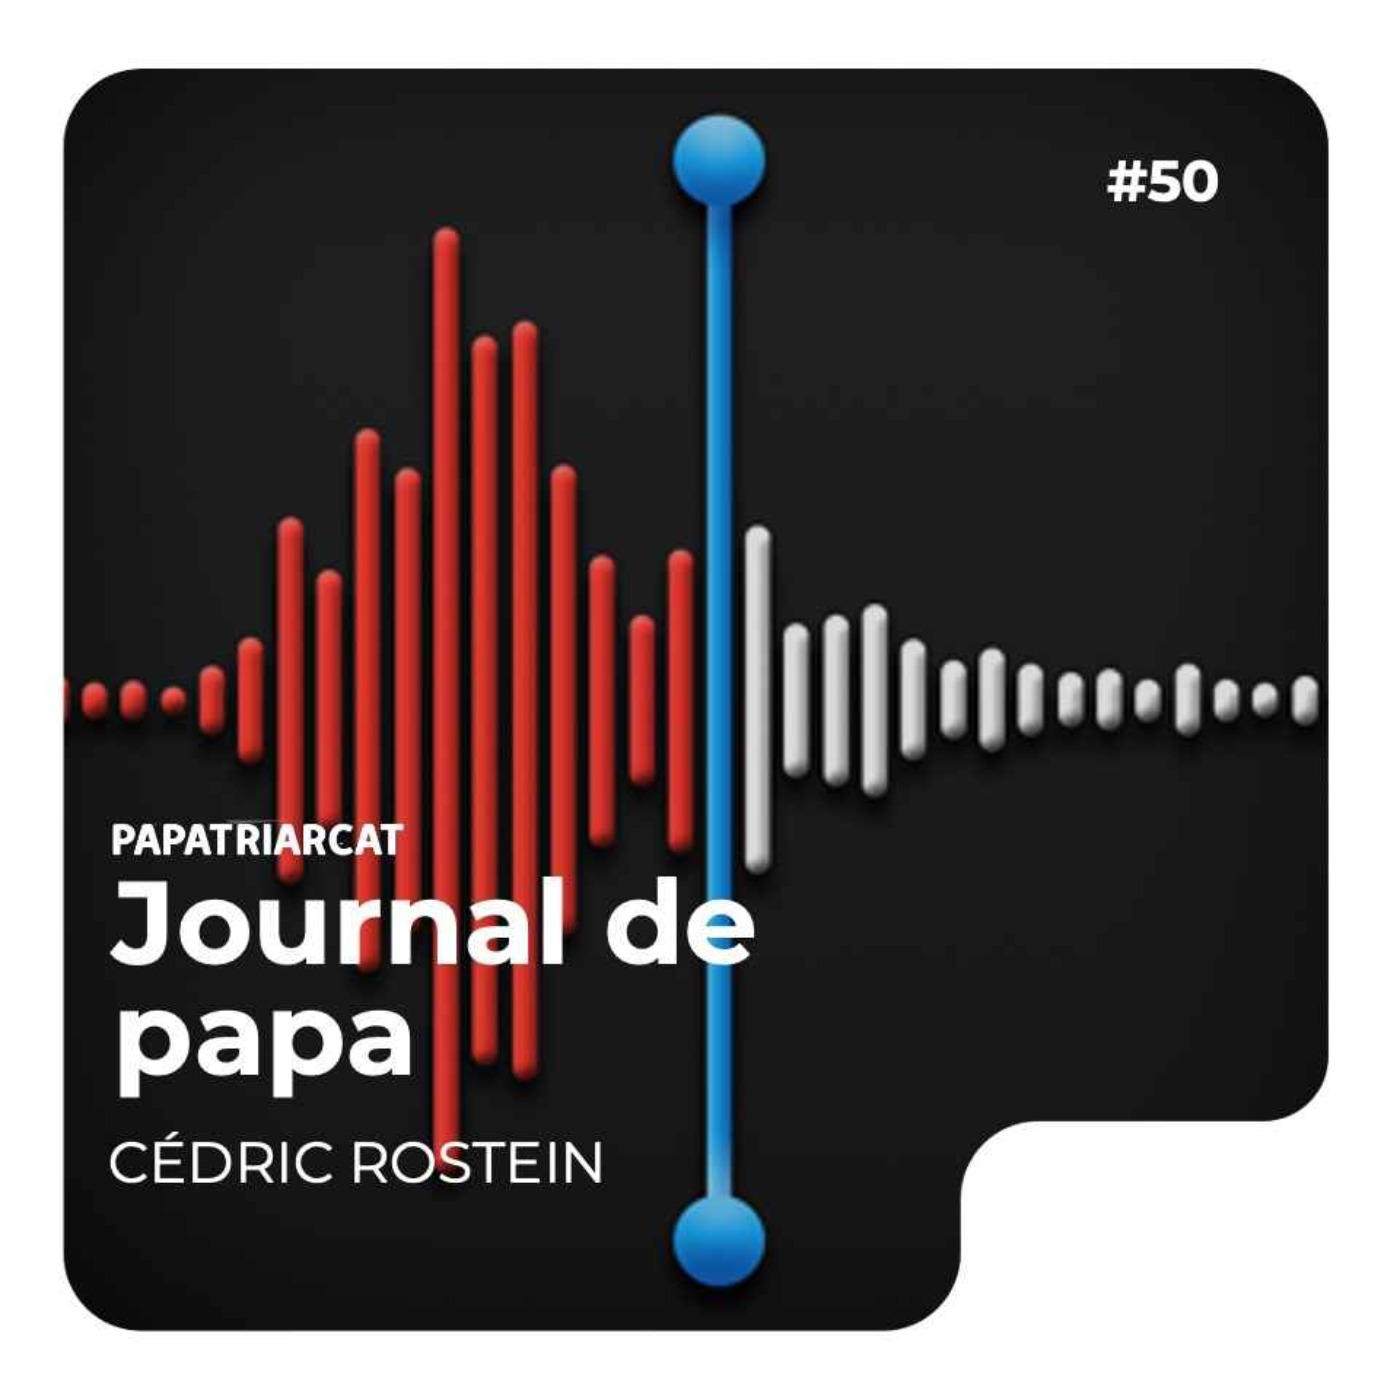 Journal de papa #50